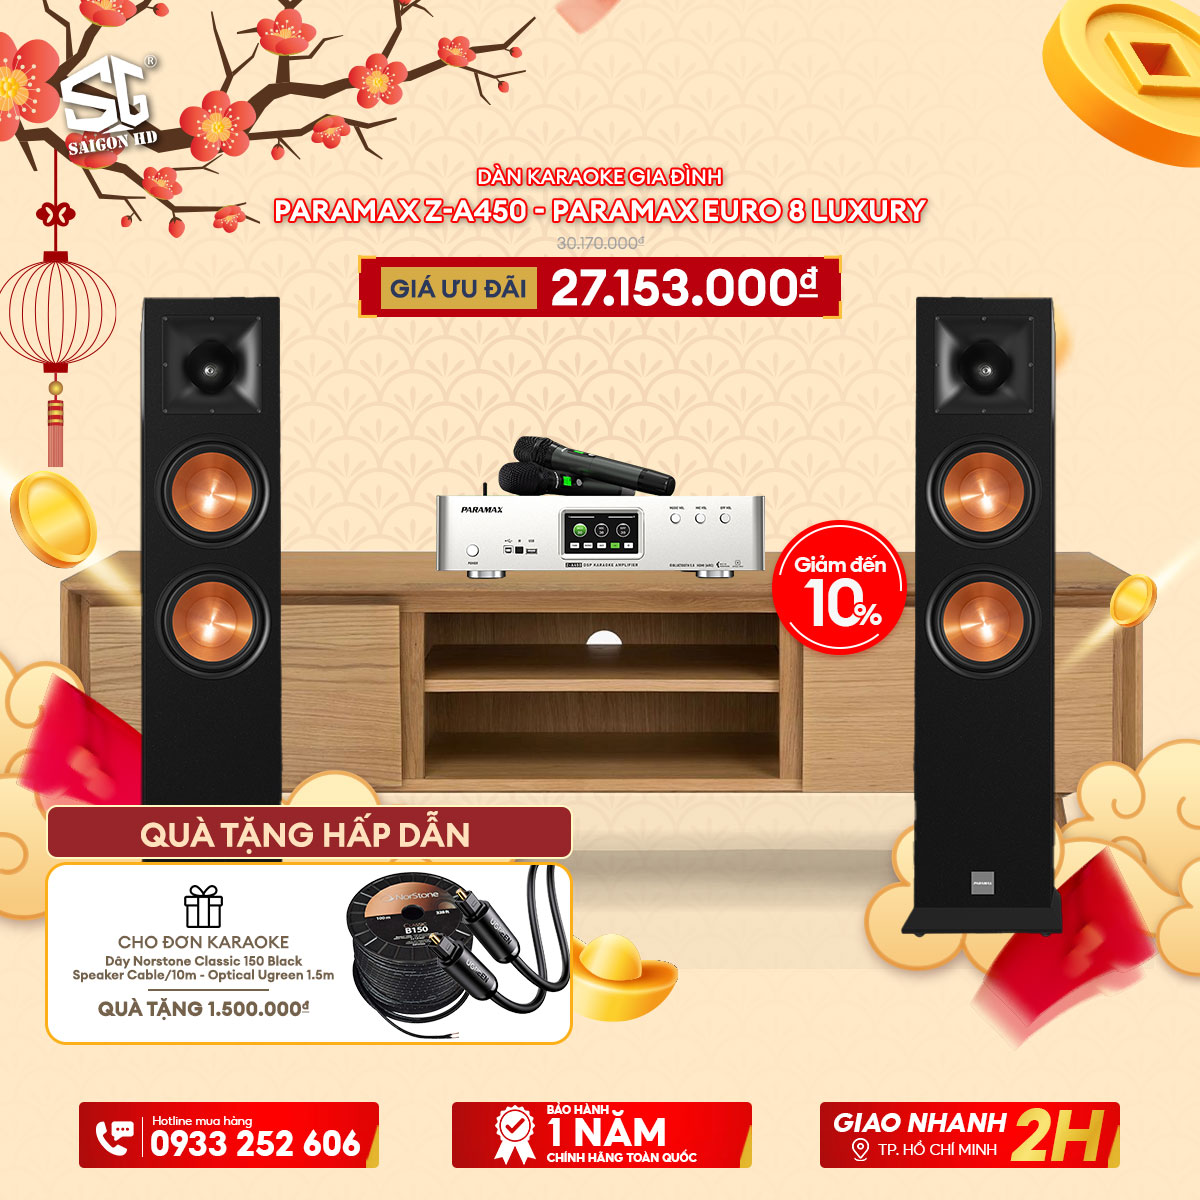 Dàn karaoke Paramax Z-A450 + Paramax Euro 8 Luxury